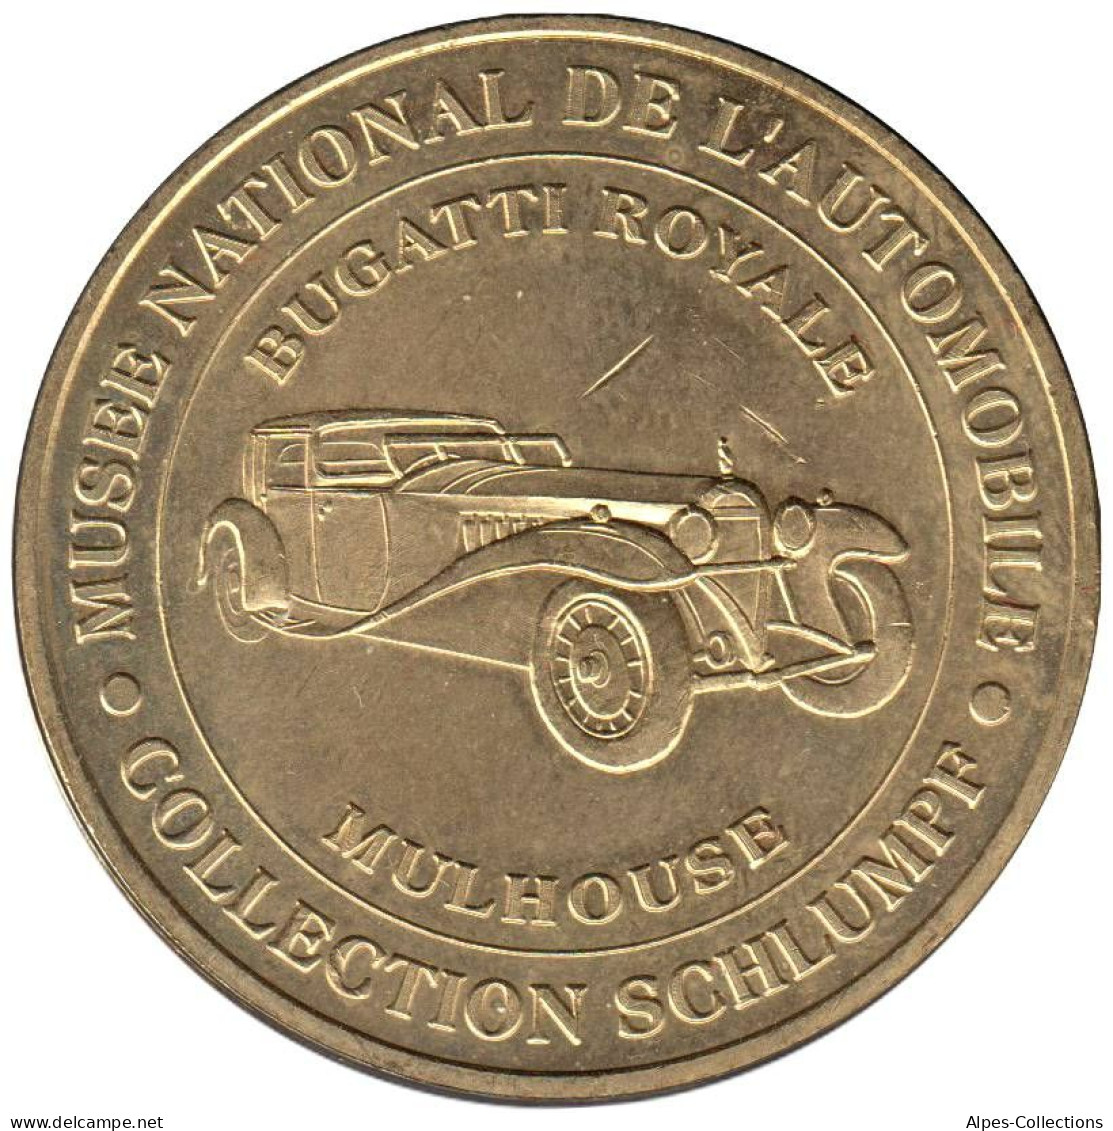 68-0221 - JETON TOURISTIQUE MDP - Mulhouse - Bugatti Royale - 2005.2 - 2005